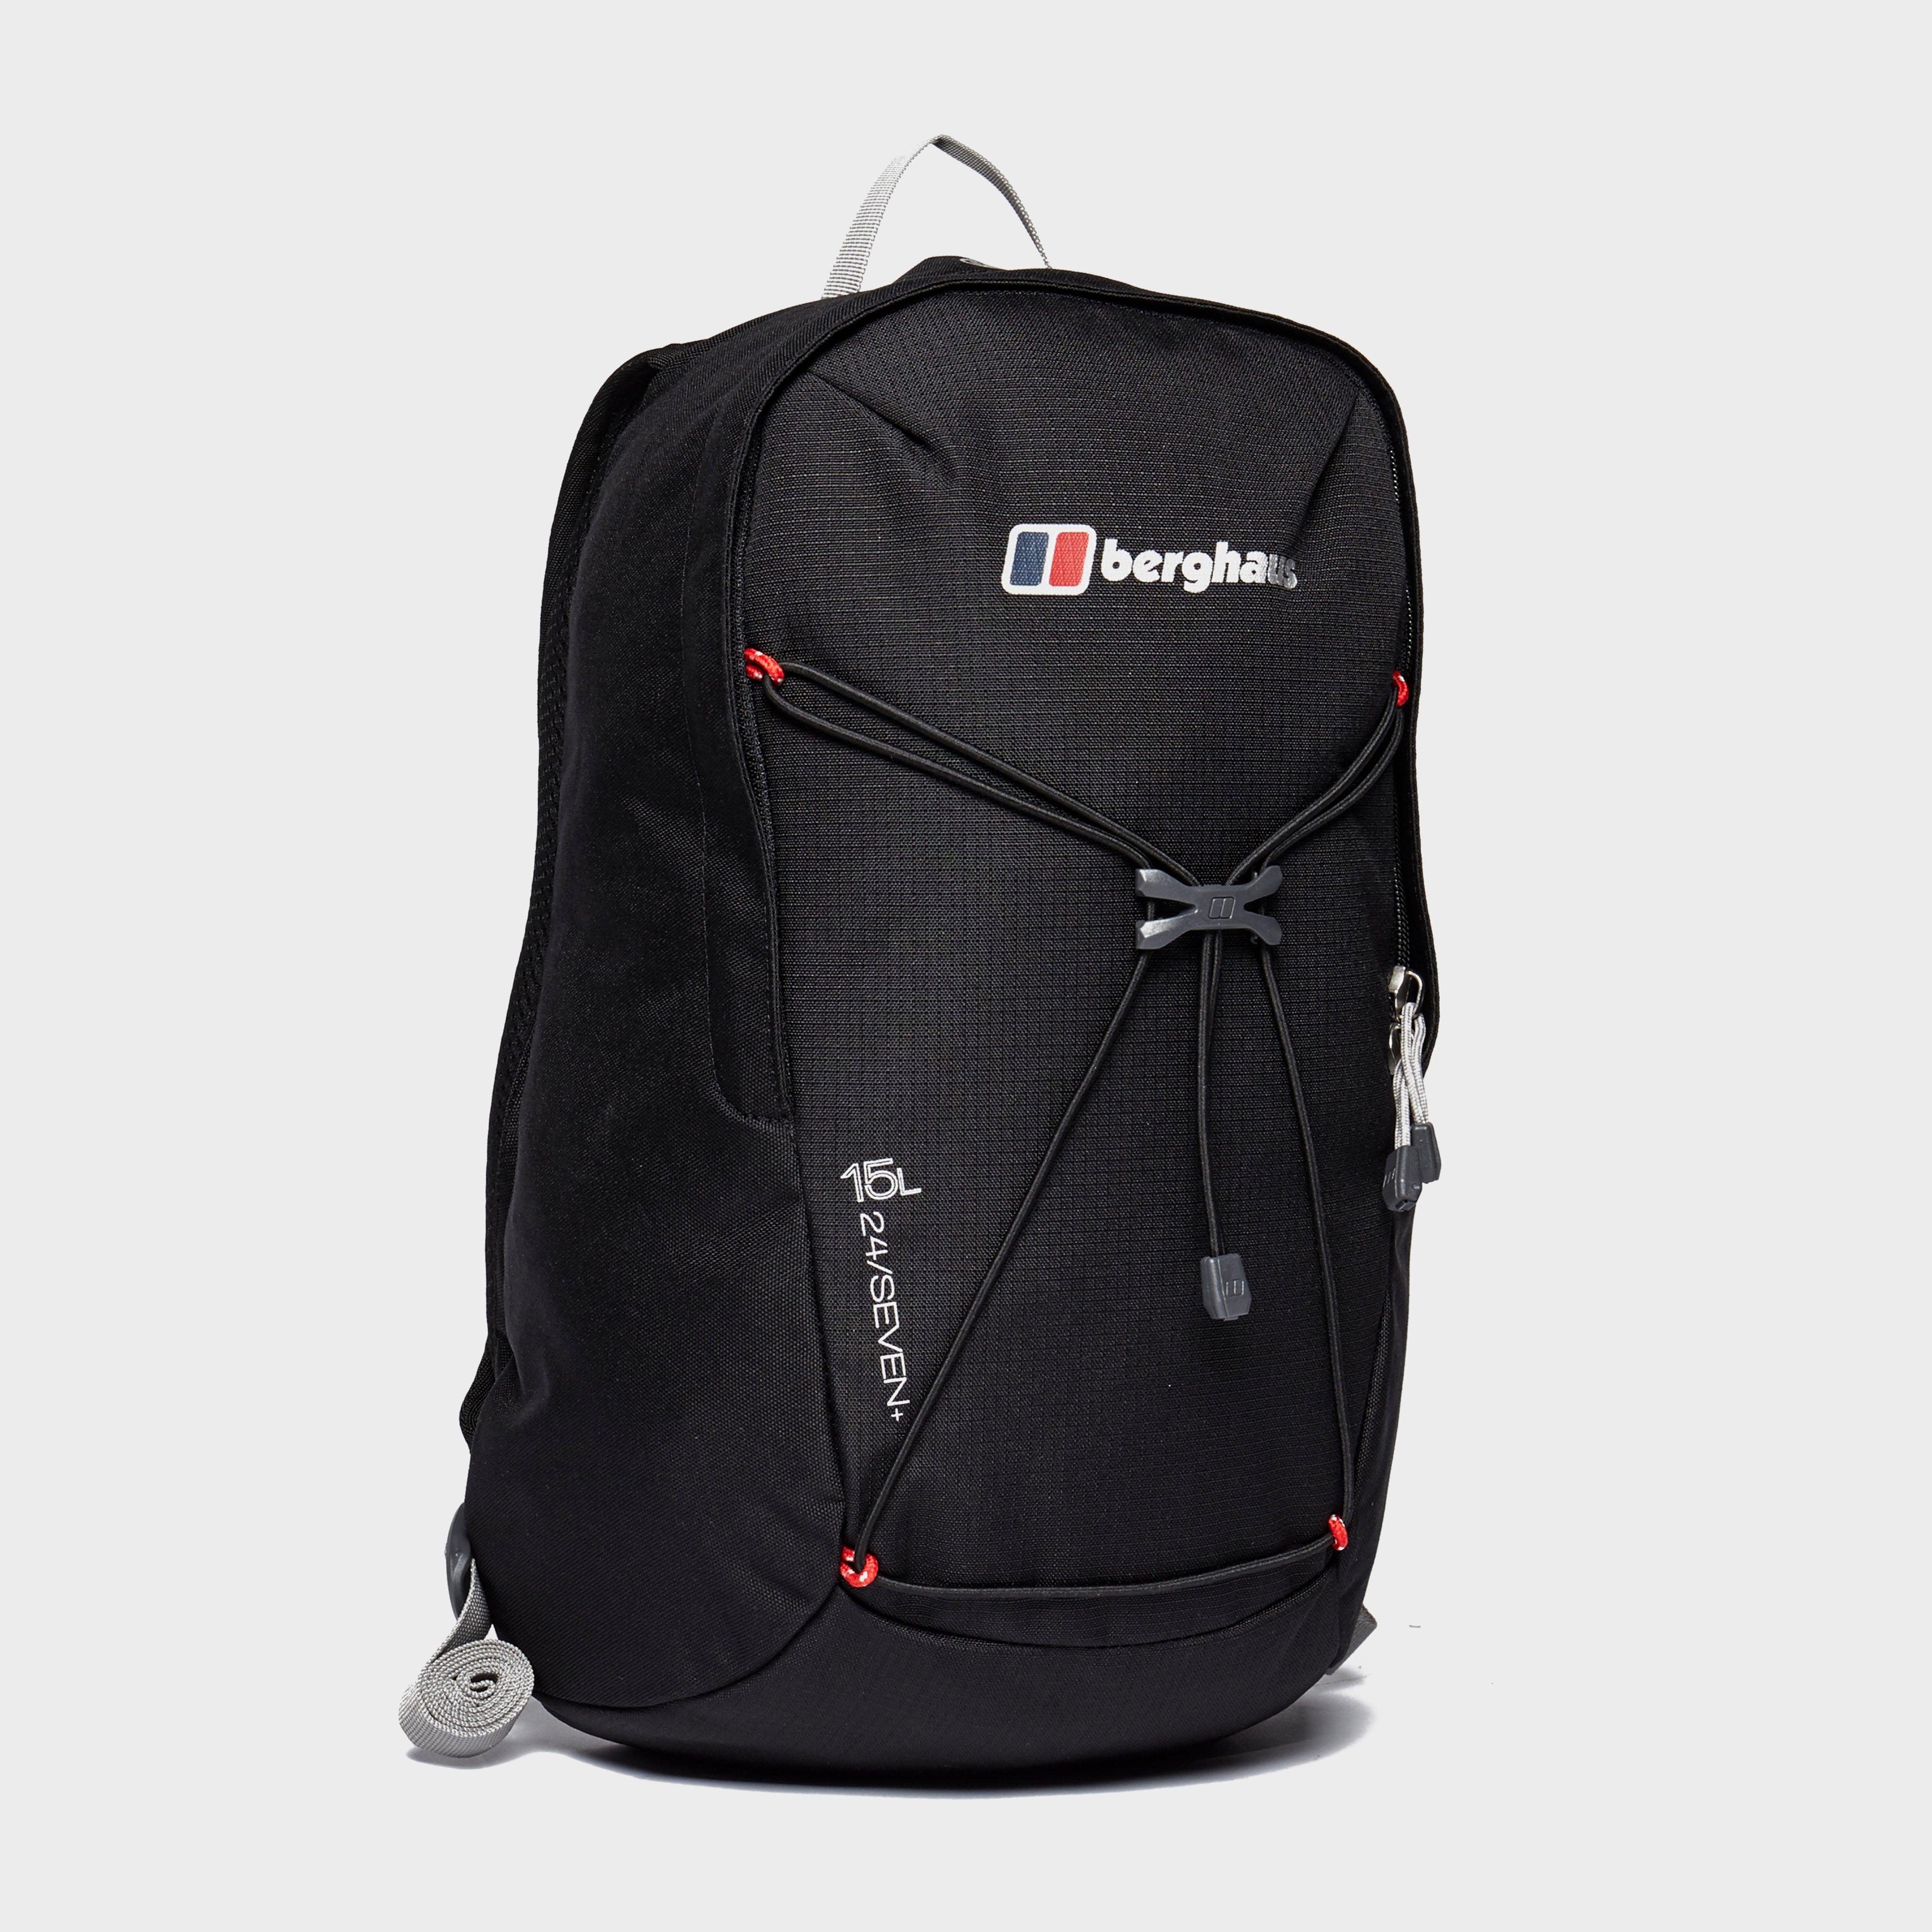 Berghaus Twentyfourseven 15l Backpack - Black/black  Black/black